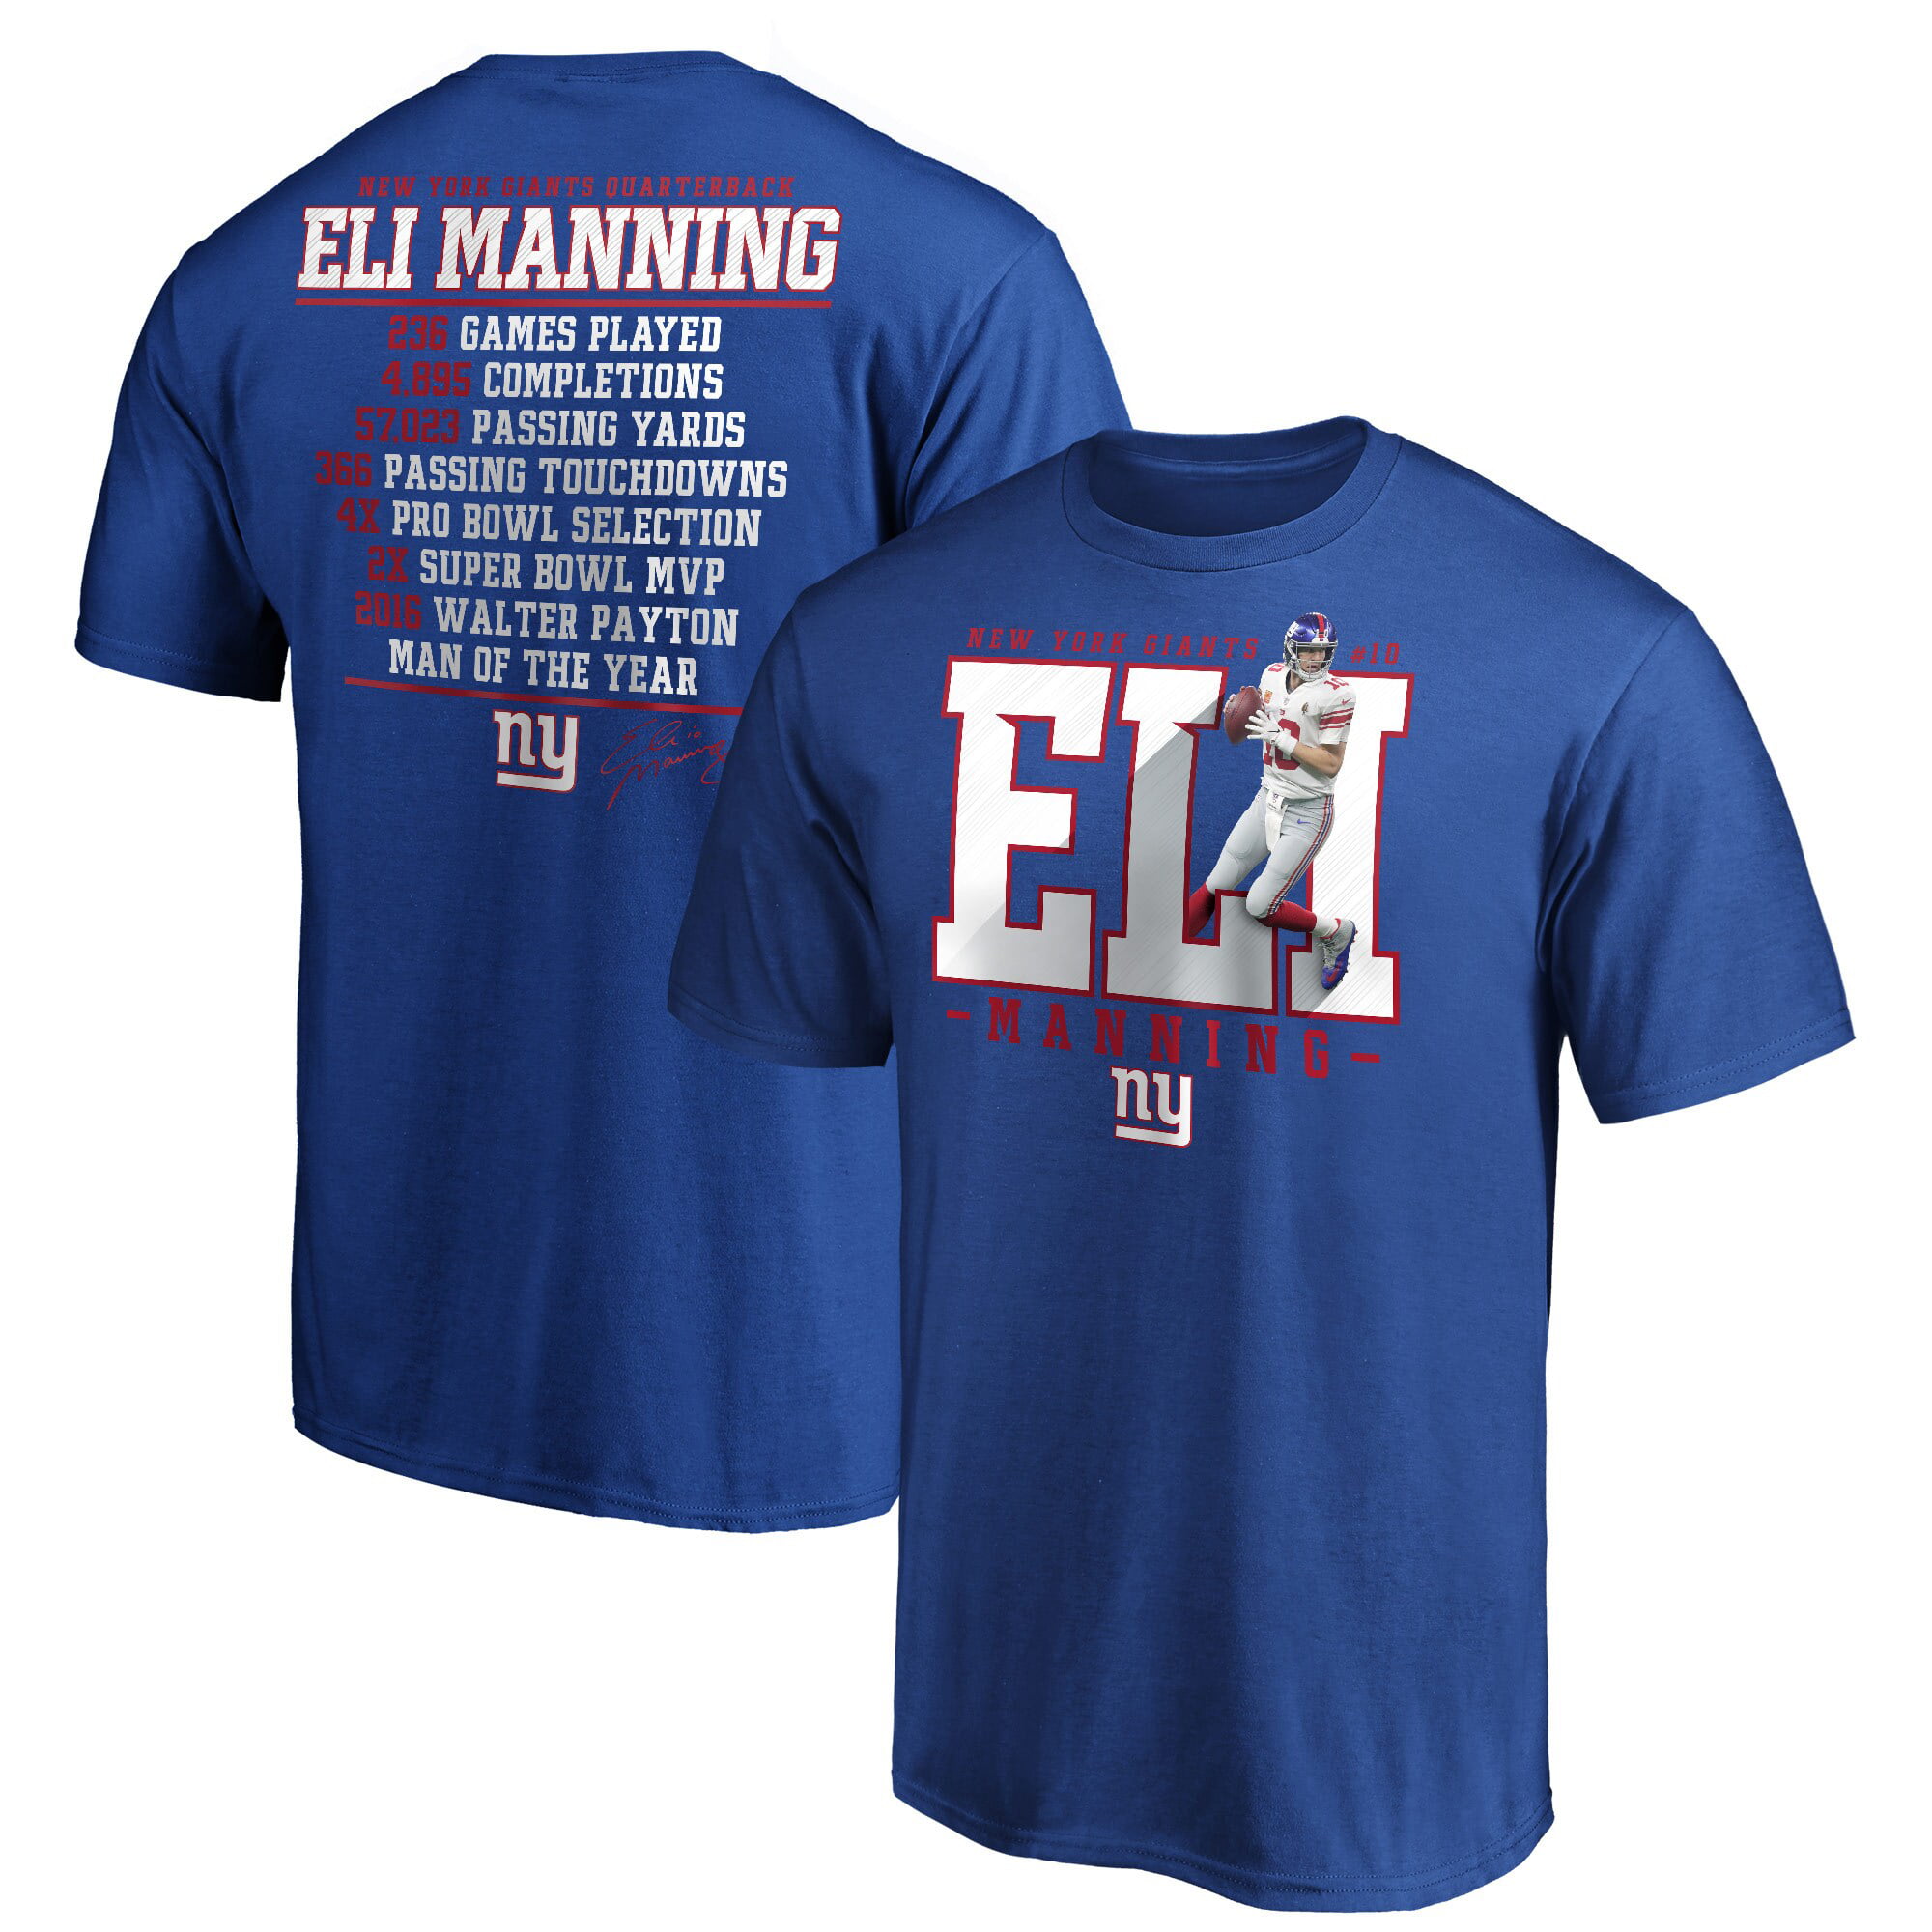 eli manning t shirt